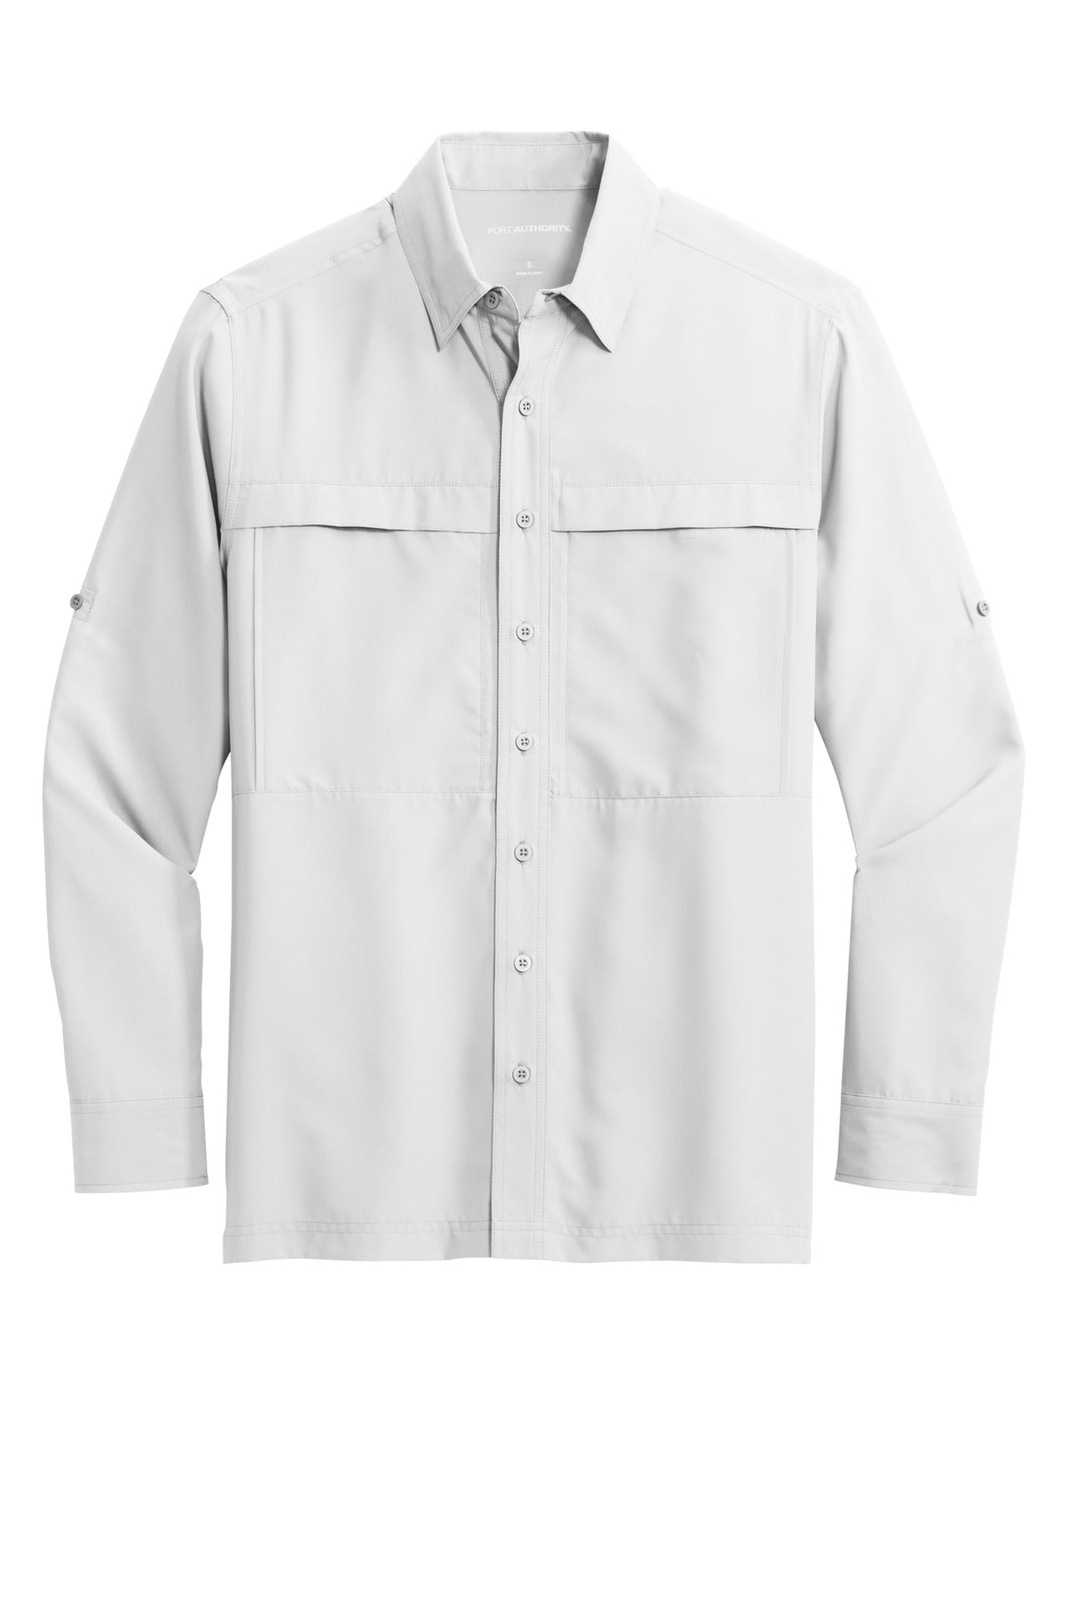 Port Authority W960 Long Sleeve UV Daybreak Shirt - White - HIT a Double - 2